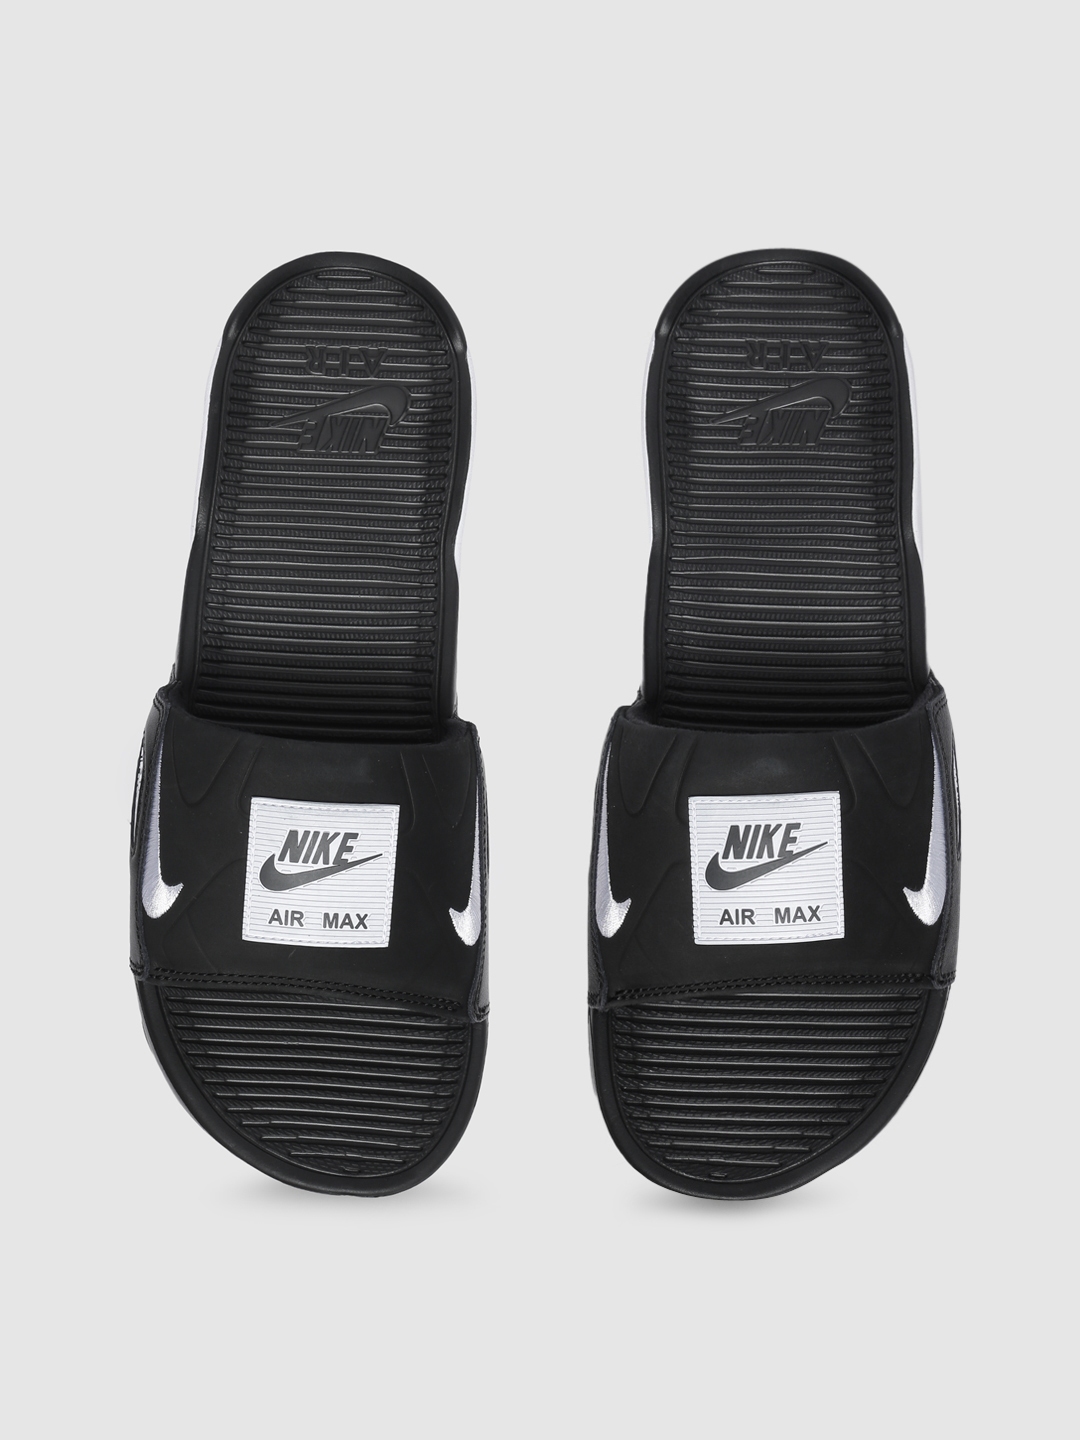 Buy Nike Men Black & White Printed AIR MAX 90 SLIDE Sliders - Flip